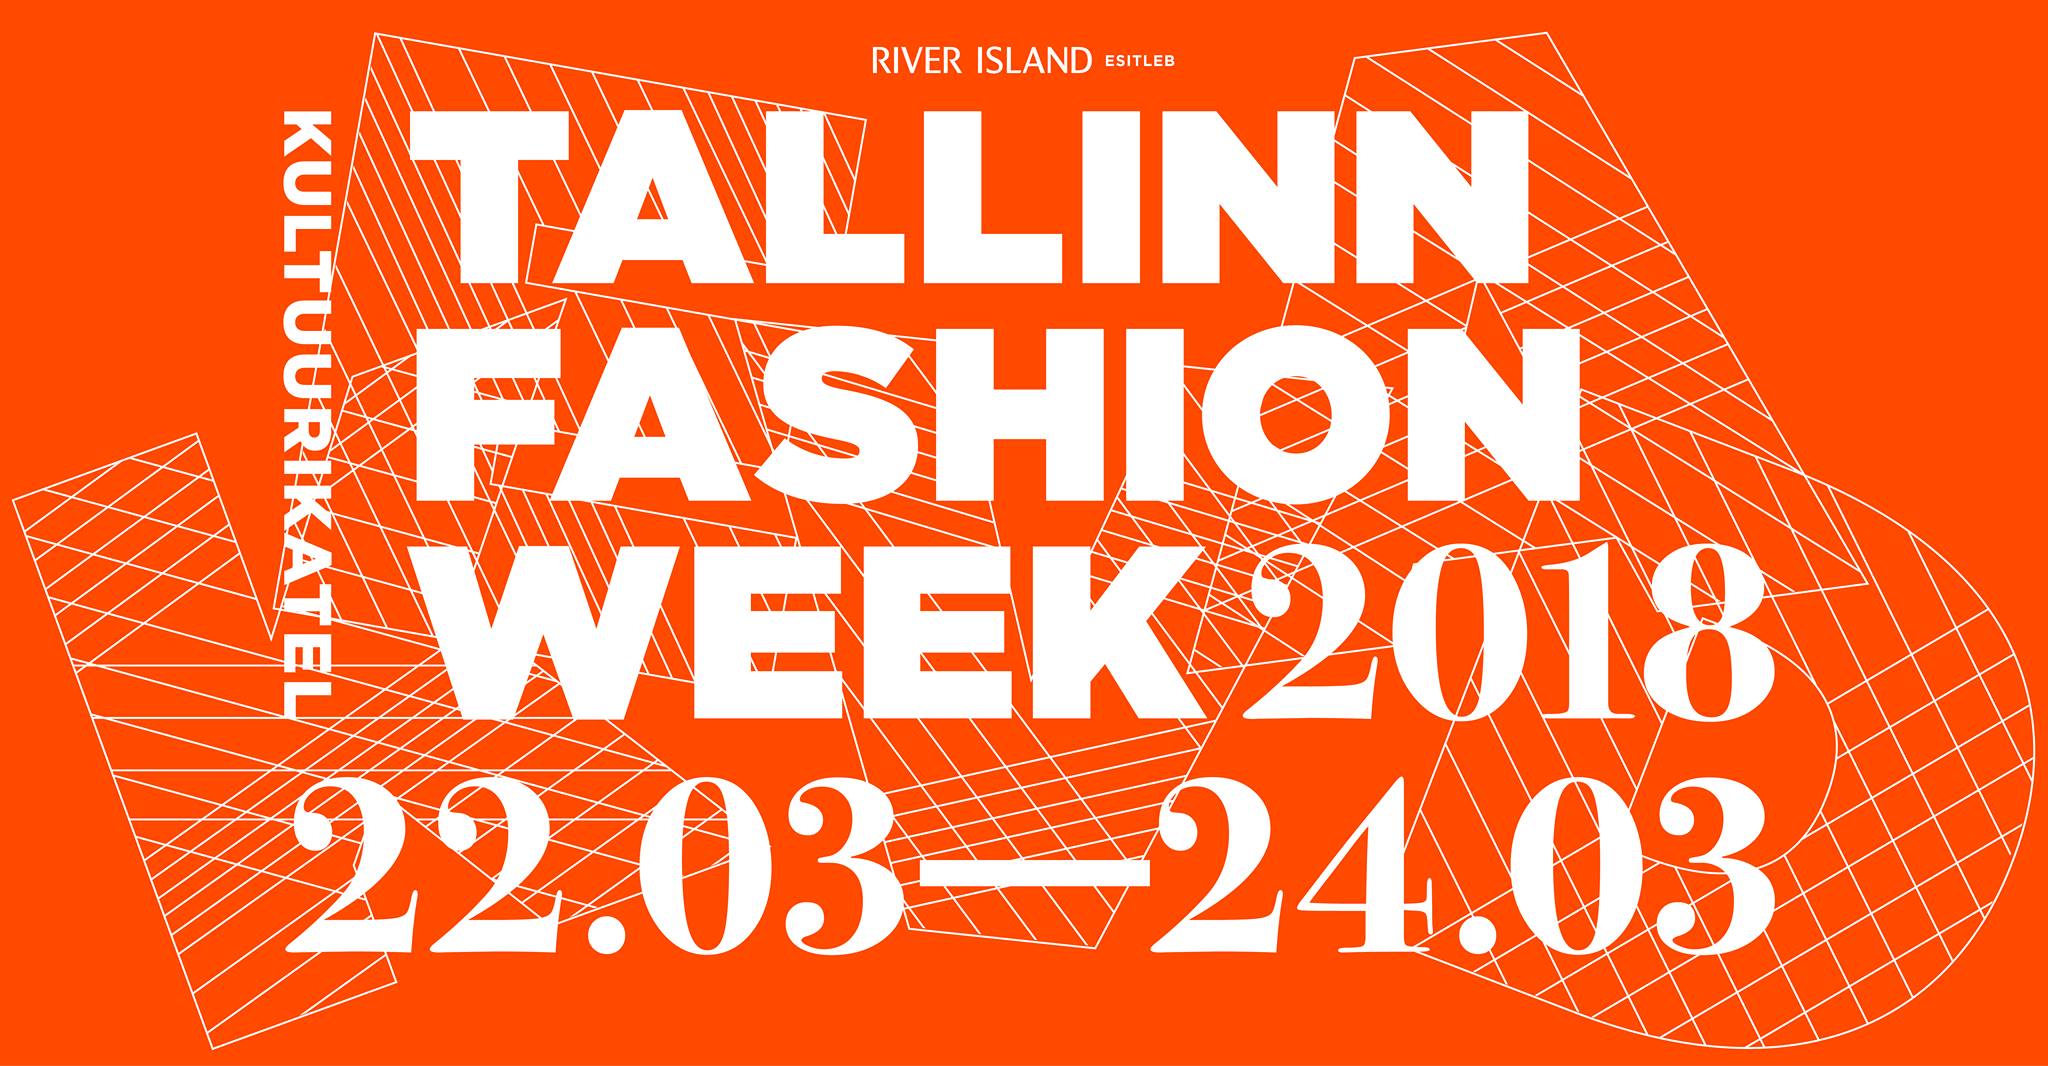 6754Tallinn Fashion Week 2018